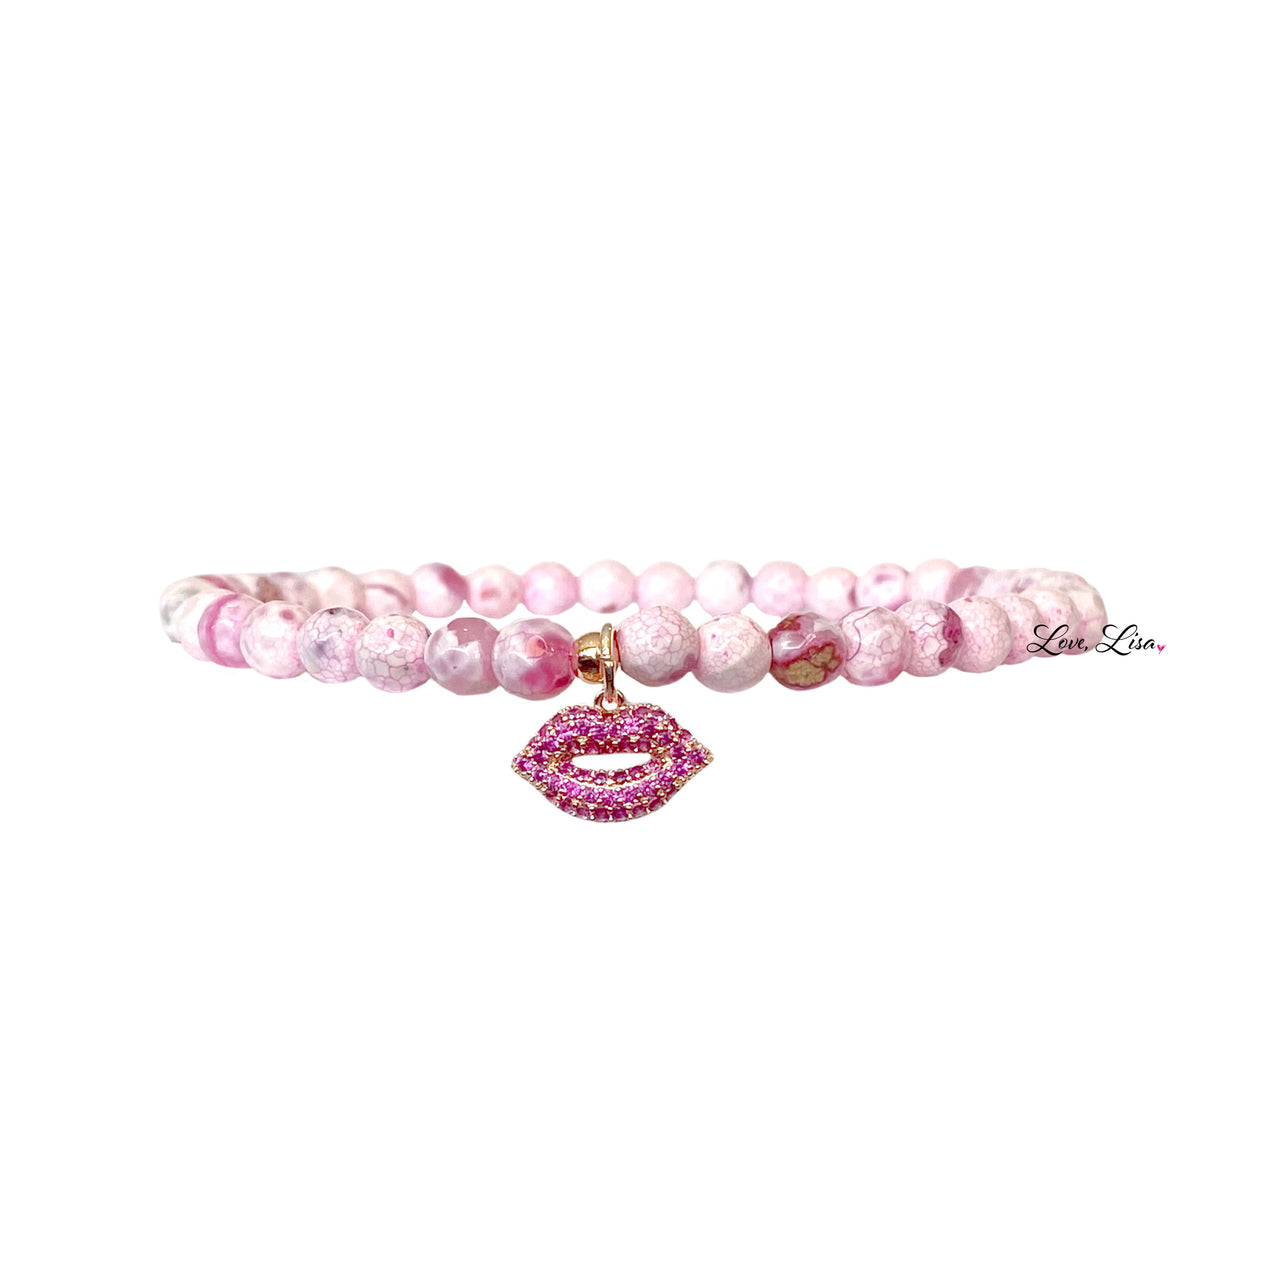 Cotton Candy Hot Pink Lips Ankle Bracelet